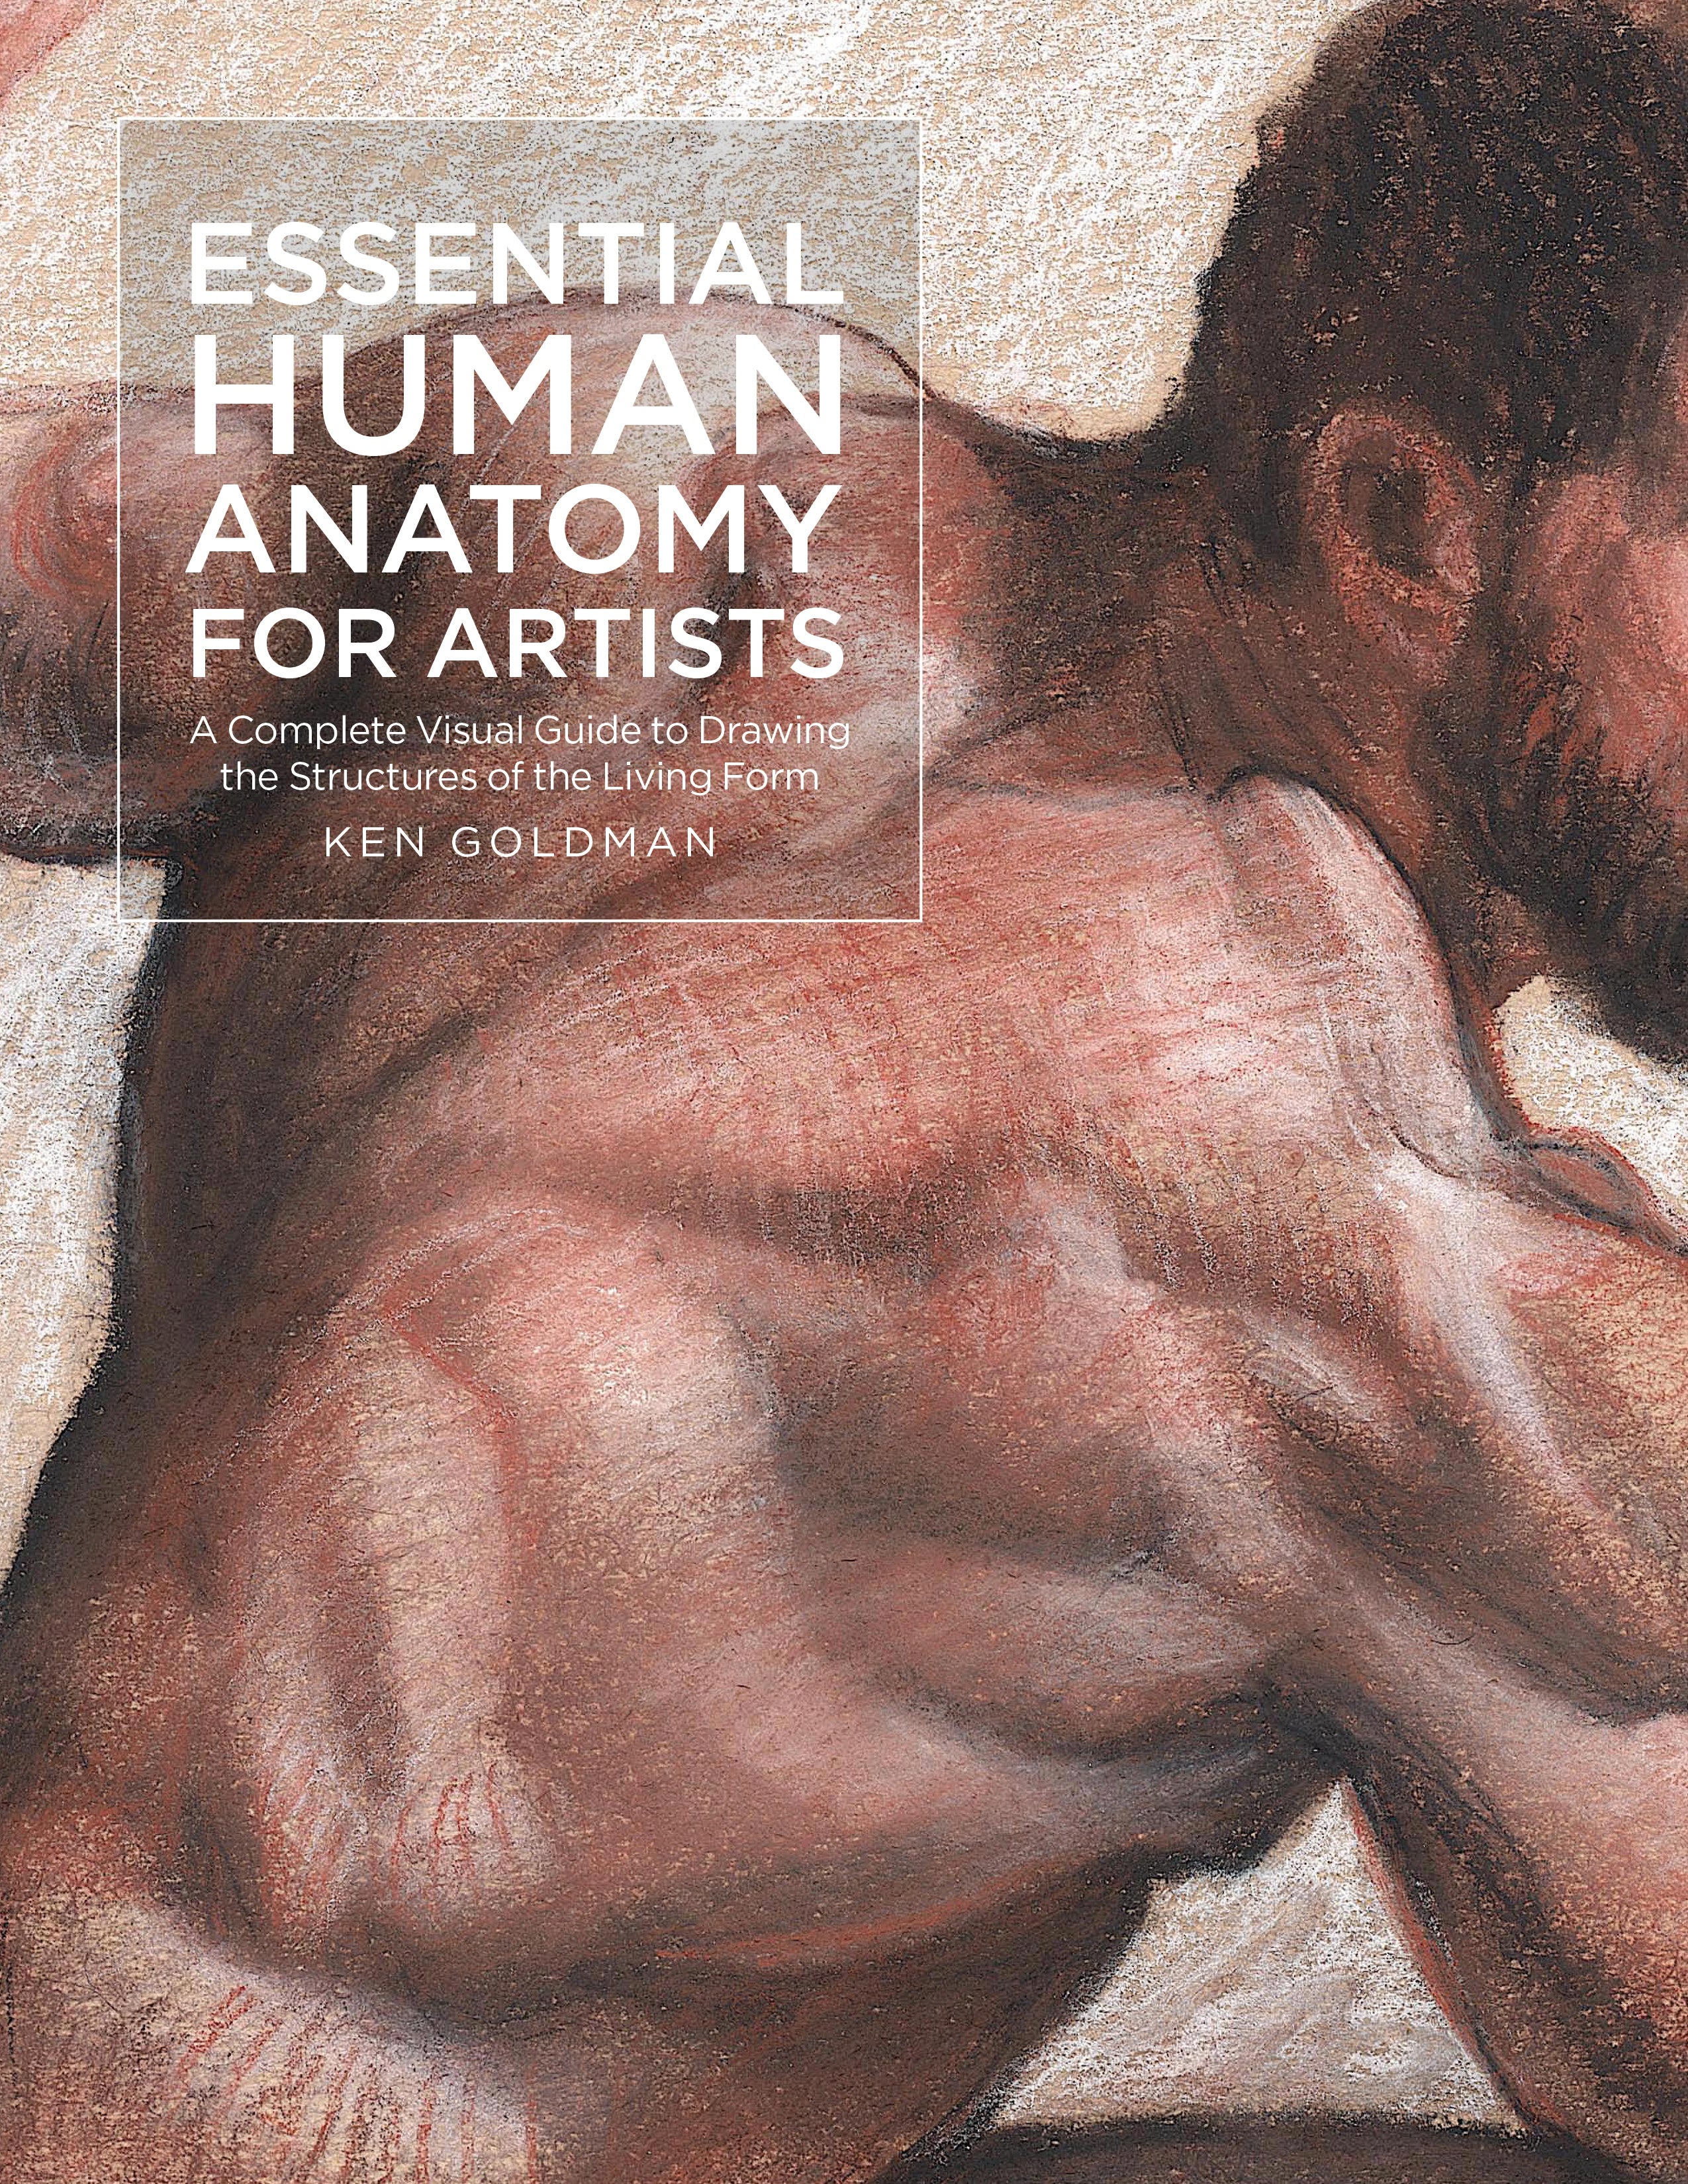 Essential Human Anatomy for Artists by Ken Goldman